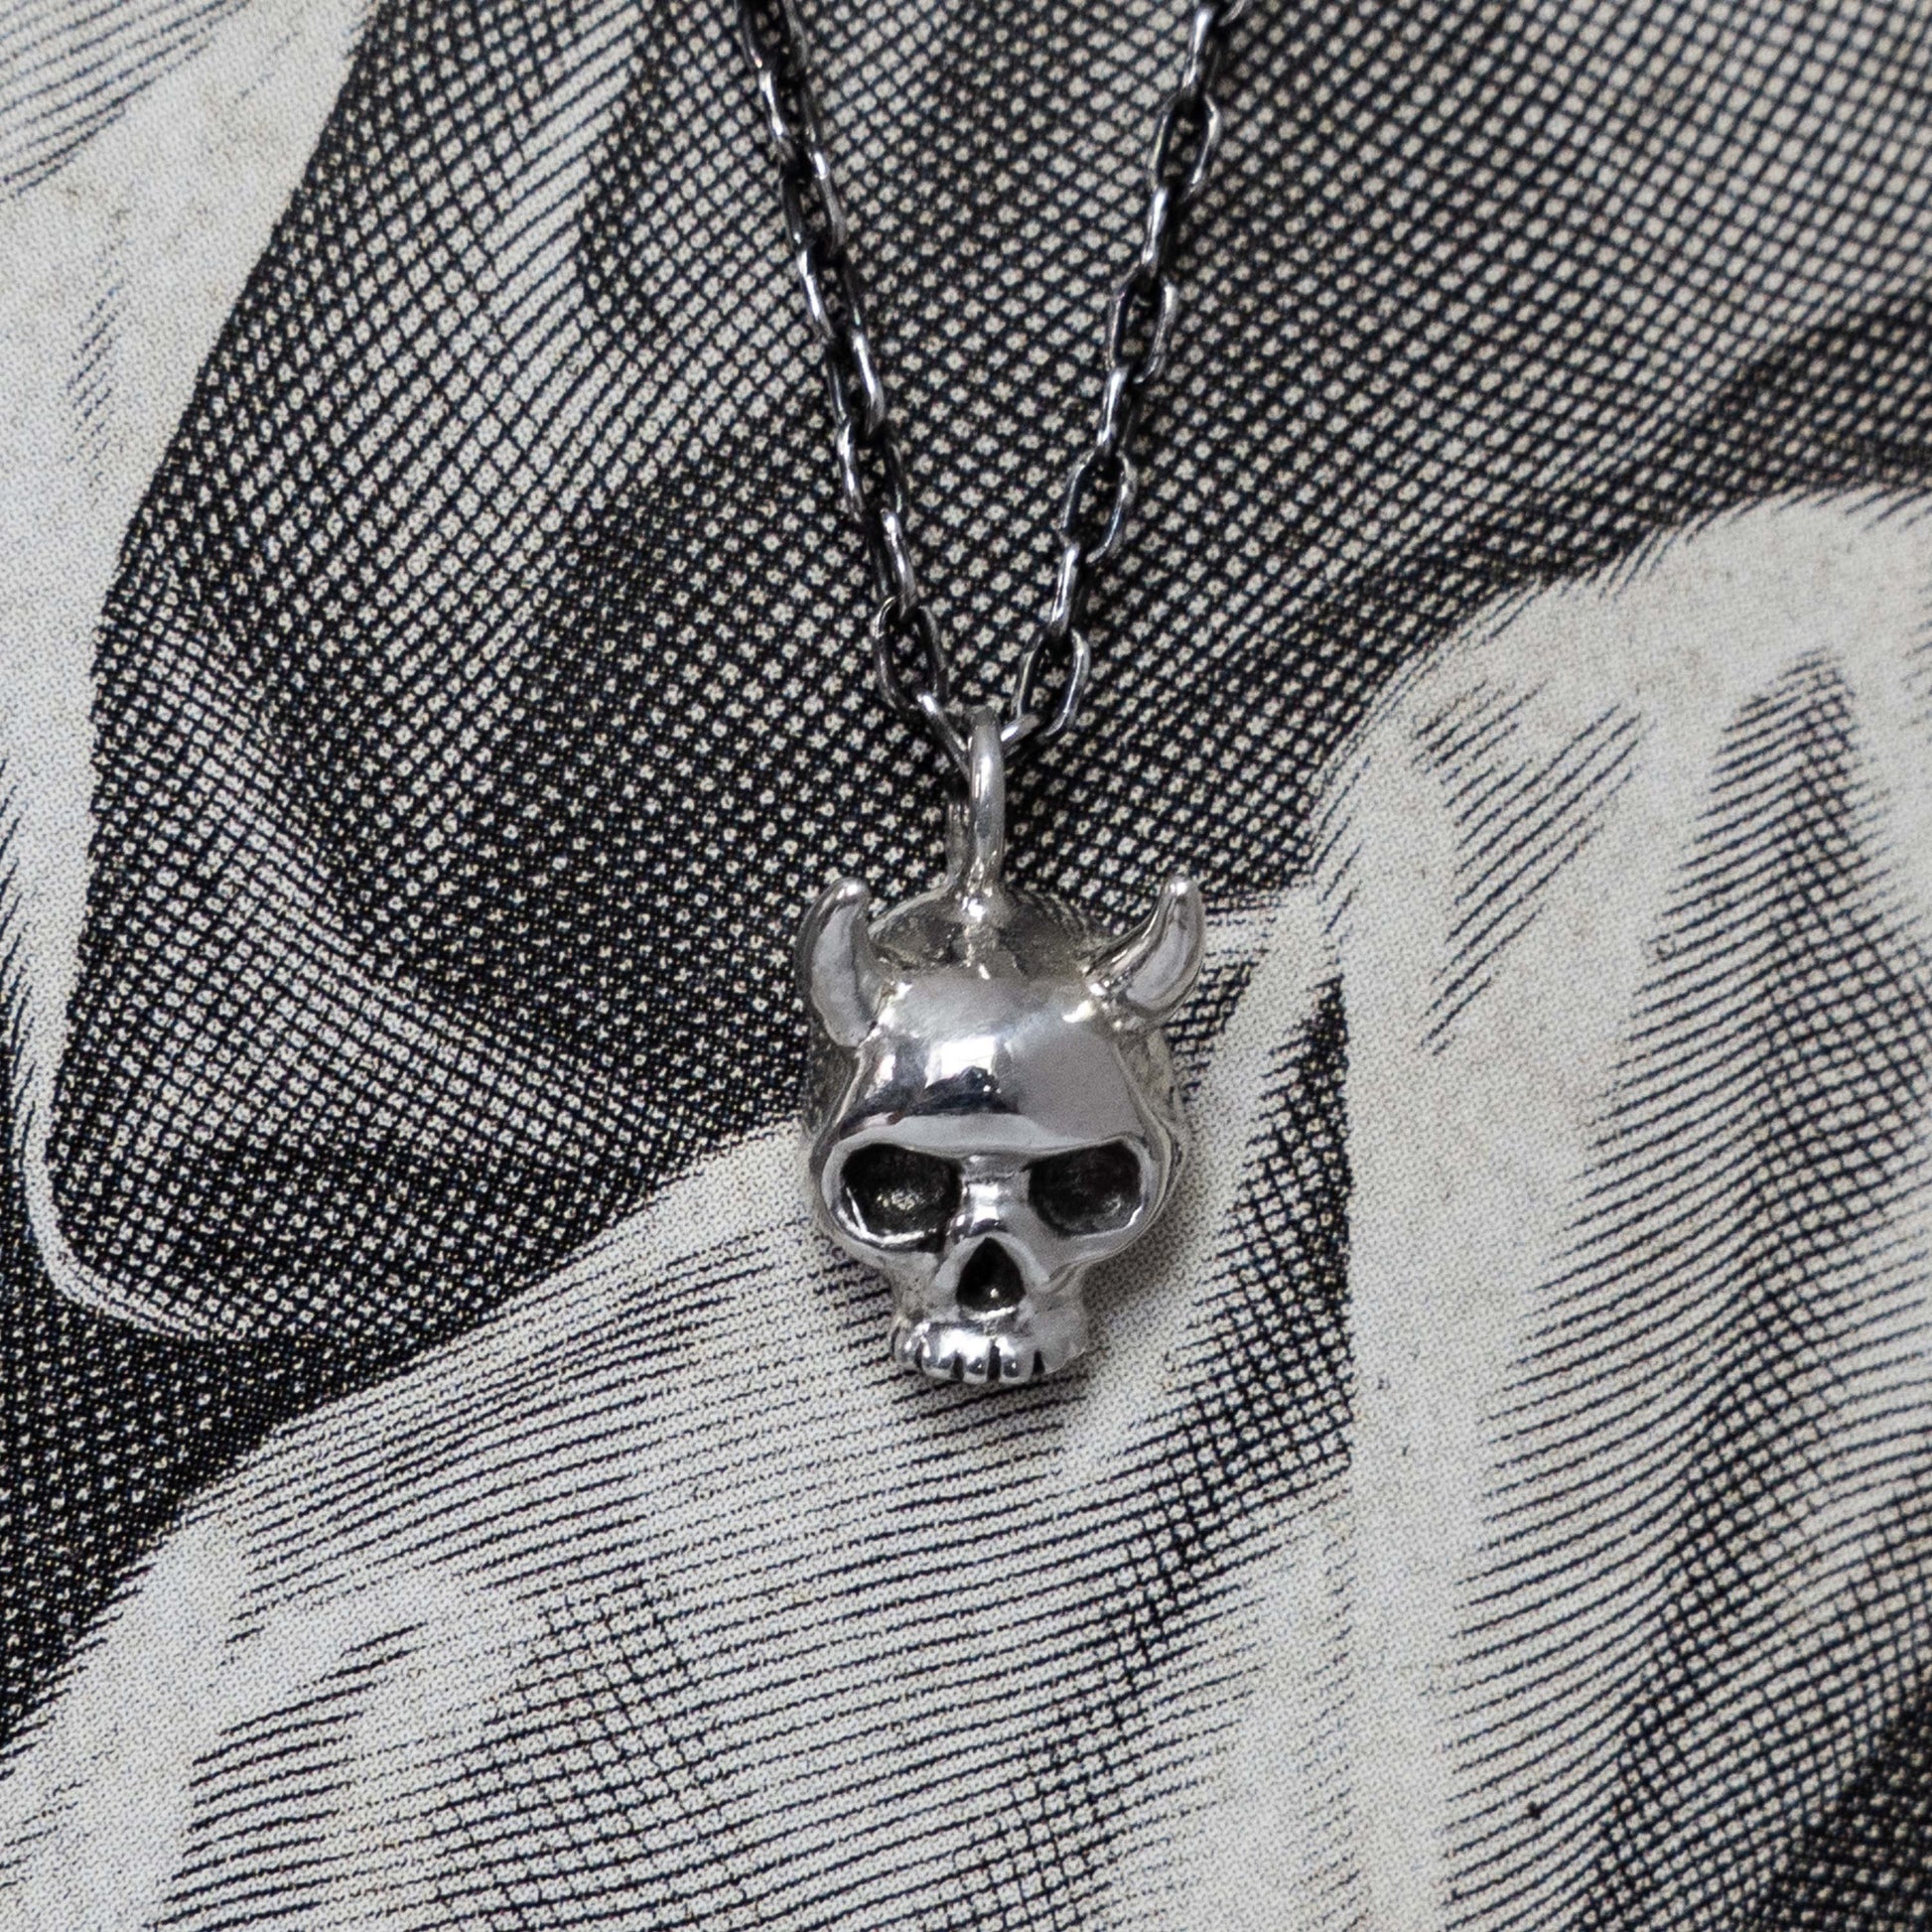 Skull Necklace - Sterling Silver - Futaba Hayashi